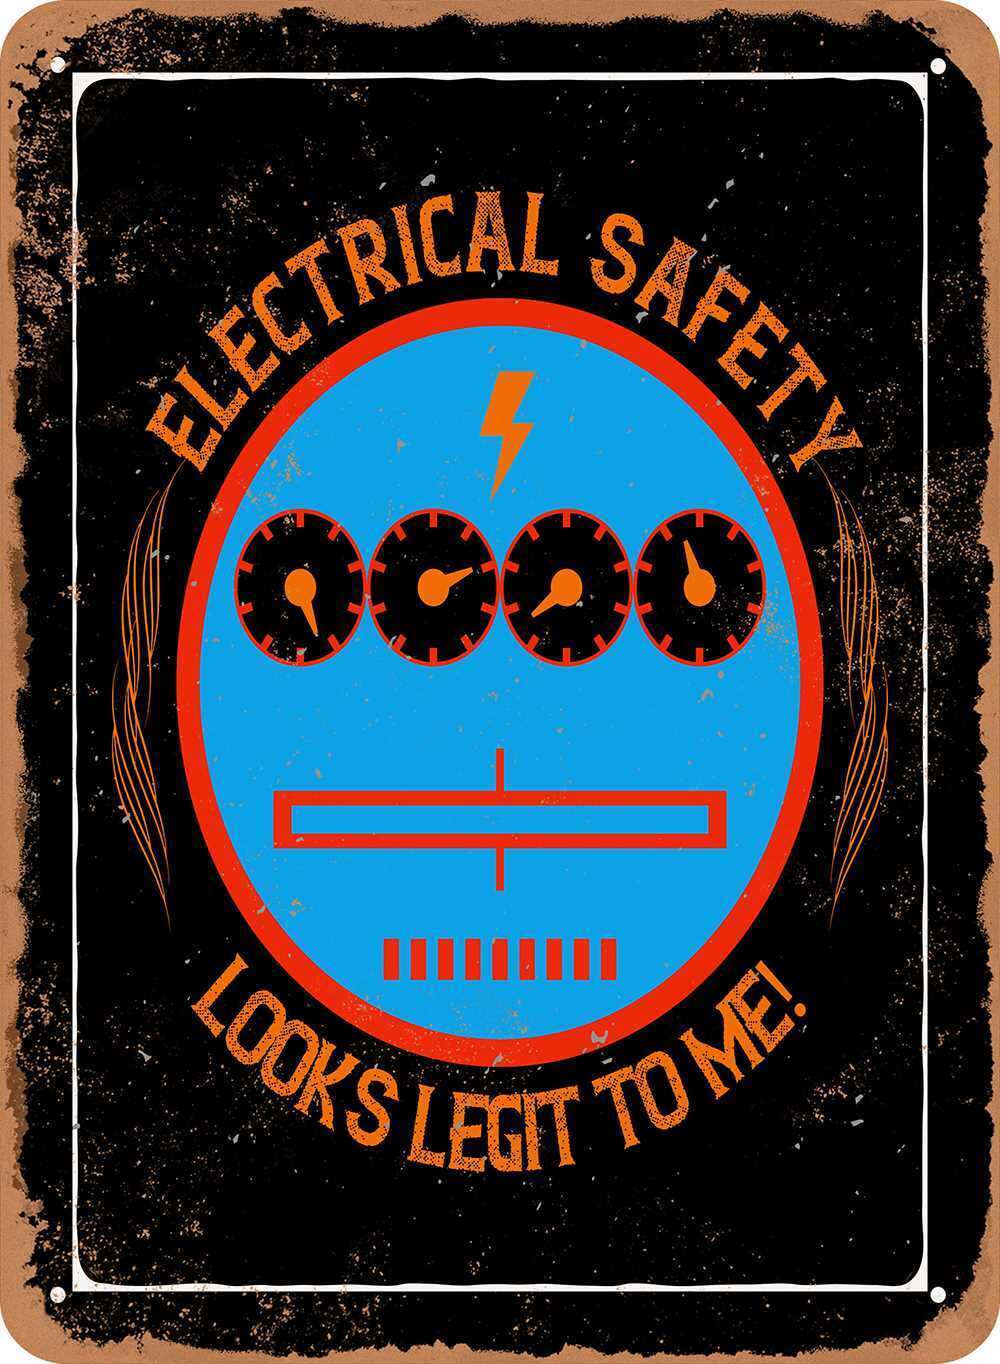 Metal Sign - Electrical Safety Looks Legit To Me - Vintage Look